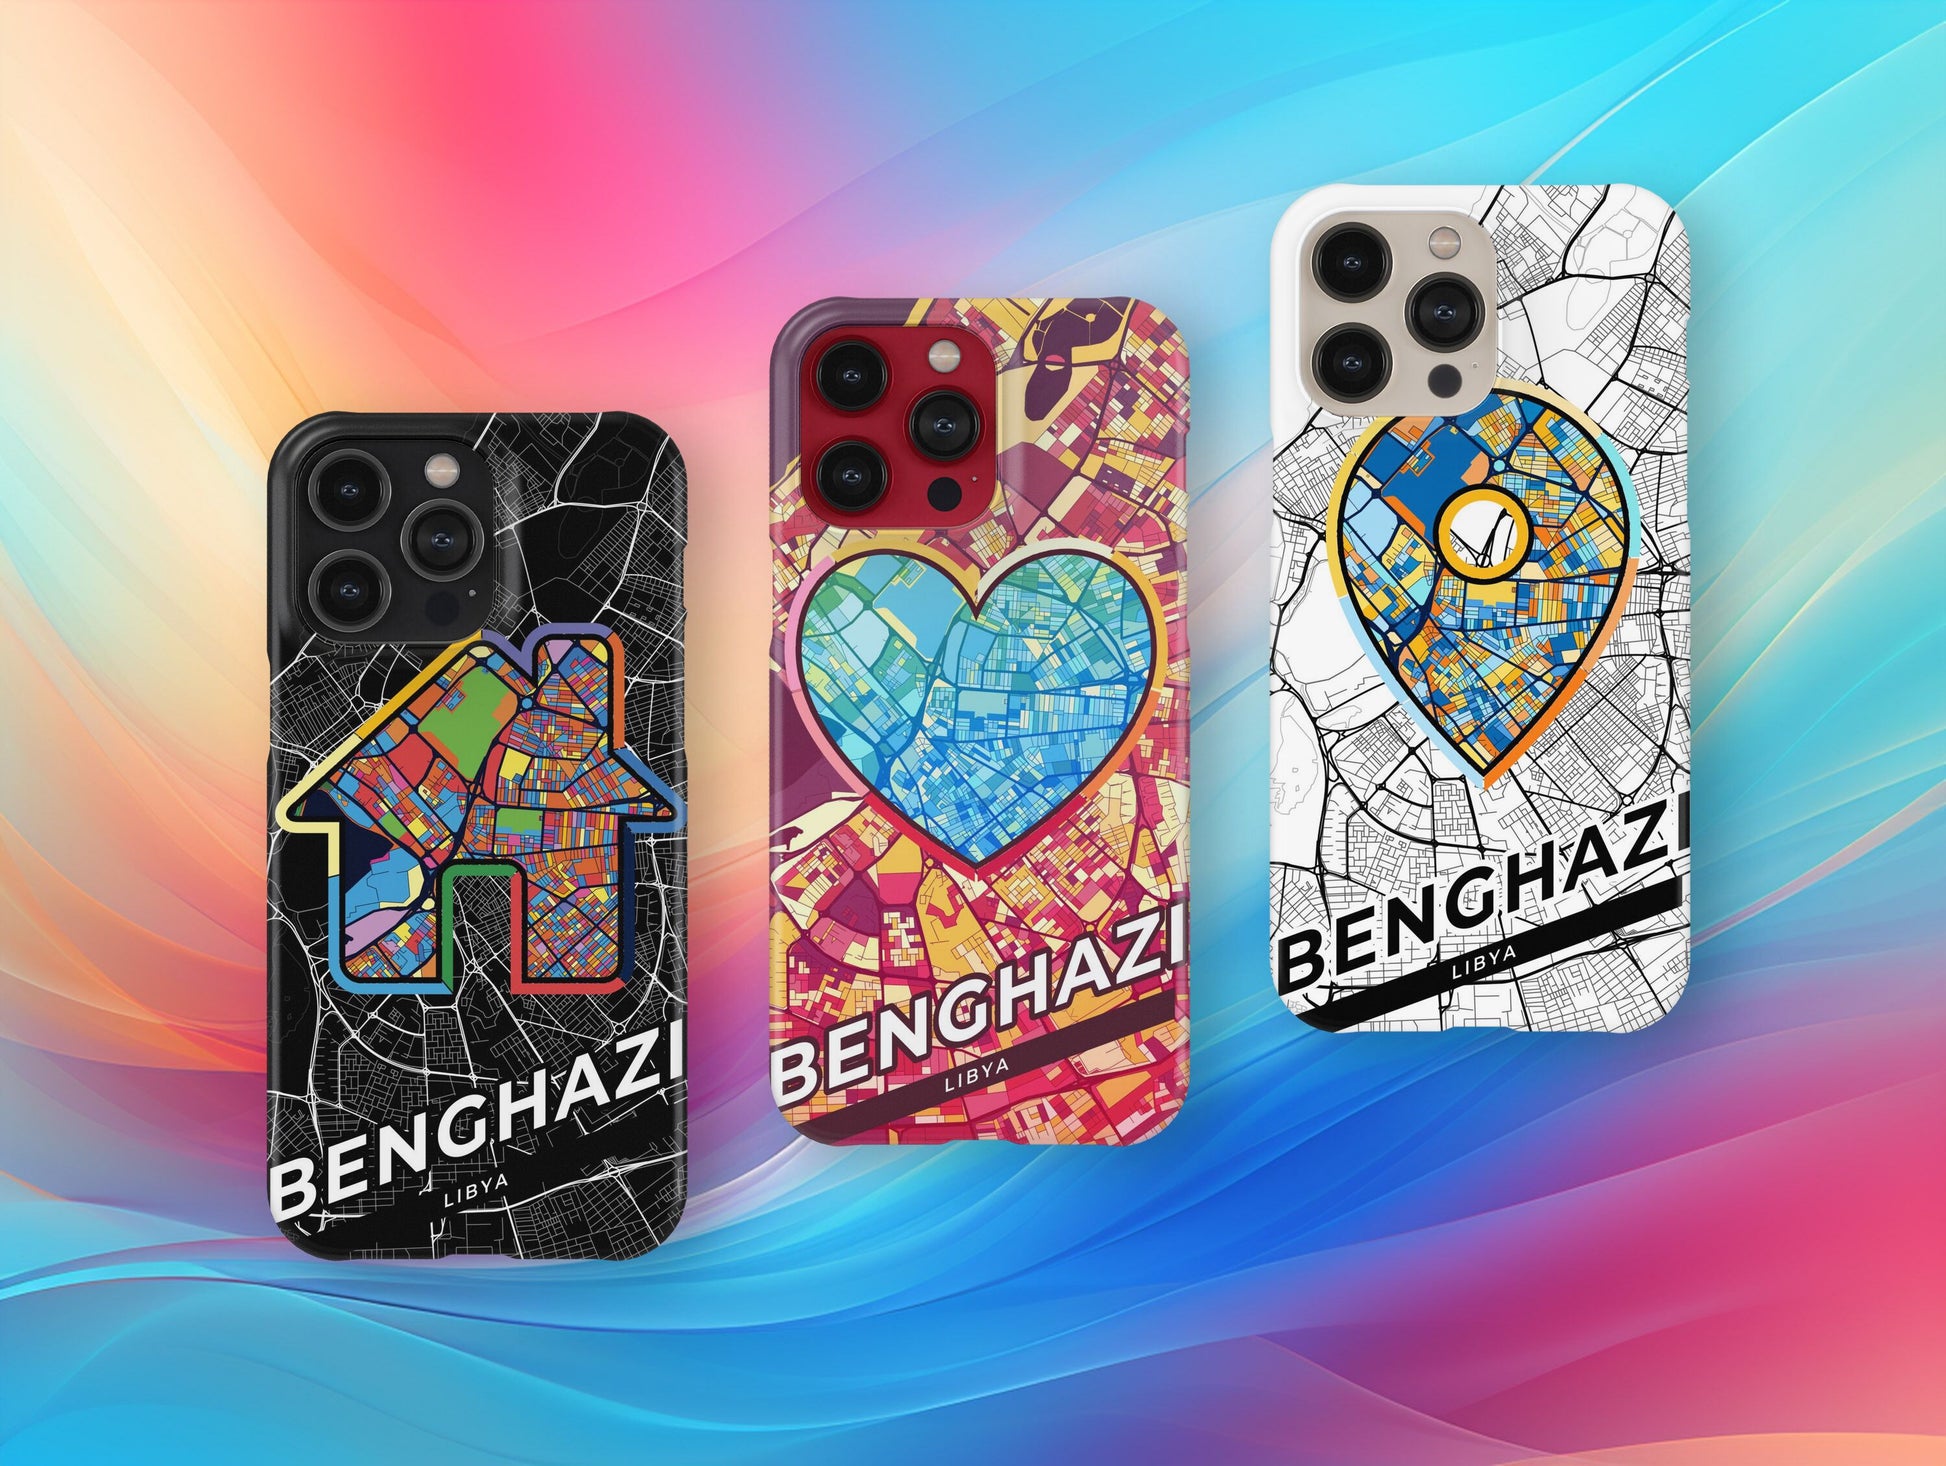 Benghazi Libya slim phone case with colorful icon. Birthday, wedding or housewarming gift. Couple match cases.